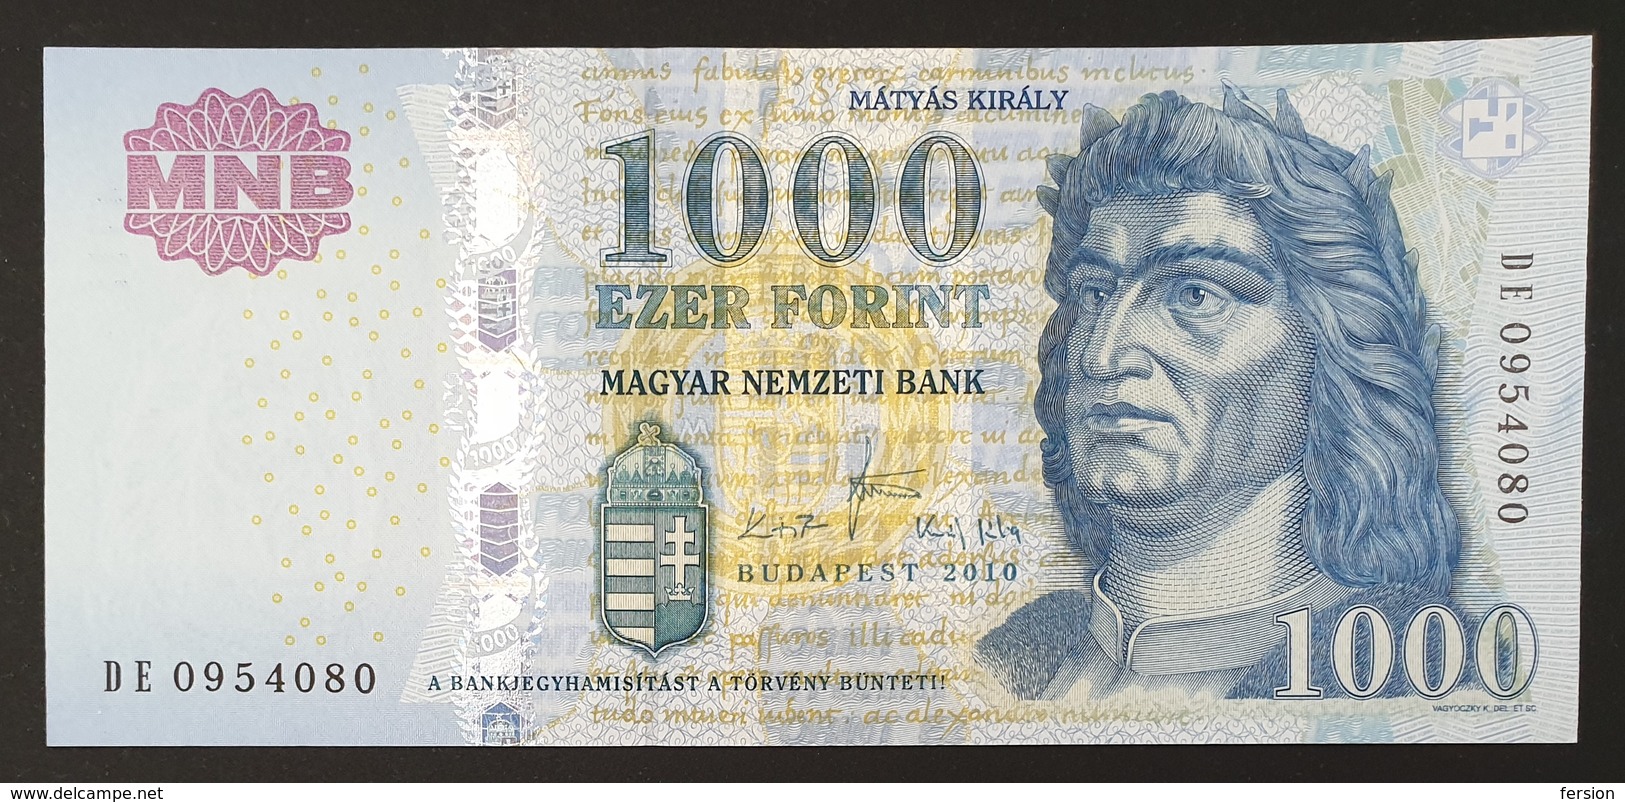 HUNGARY HONGRIE UNGARN 1000 / 1.000 FORINT - 2010 Edition UNC BANKNOTE / King Corvin Matthias FOUNTAIN Visegrád - Ungheria